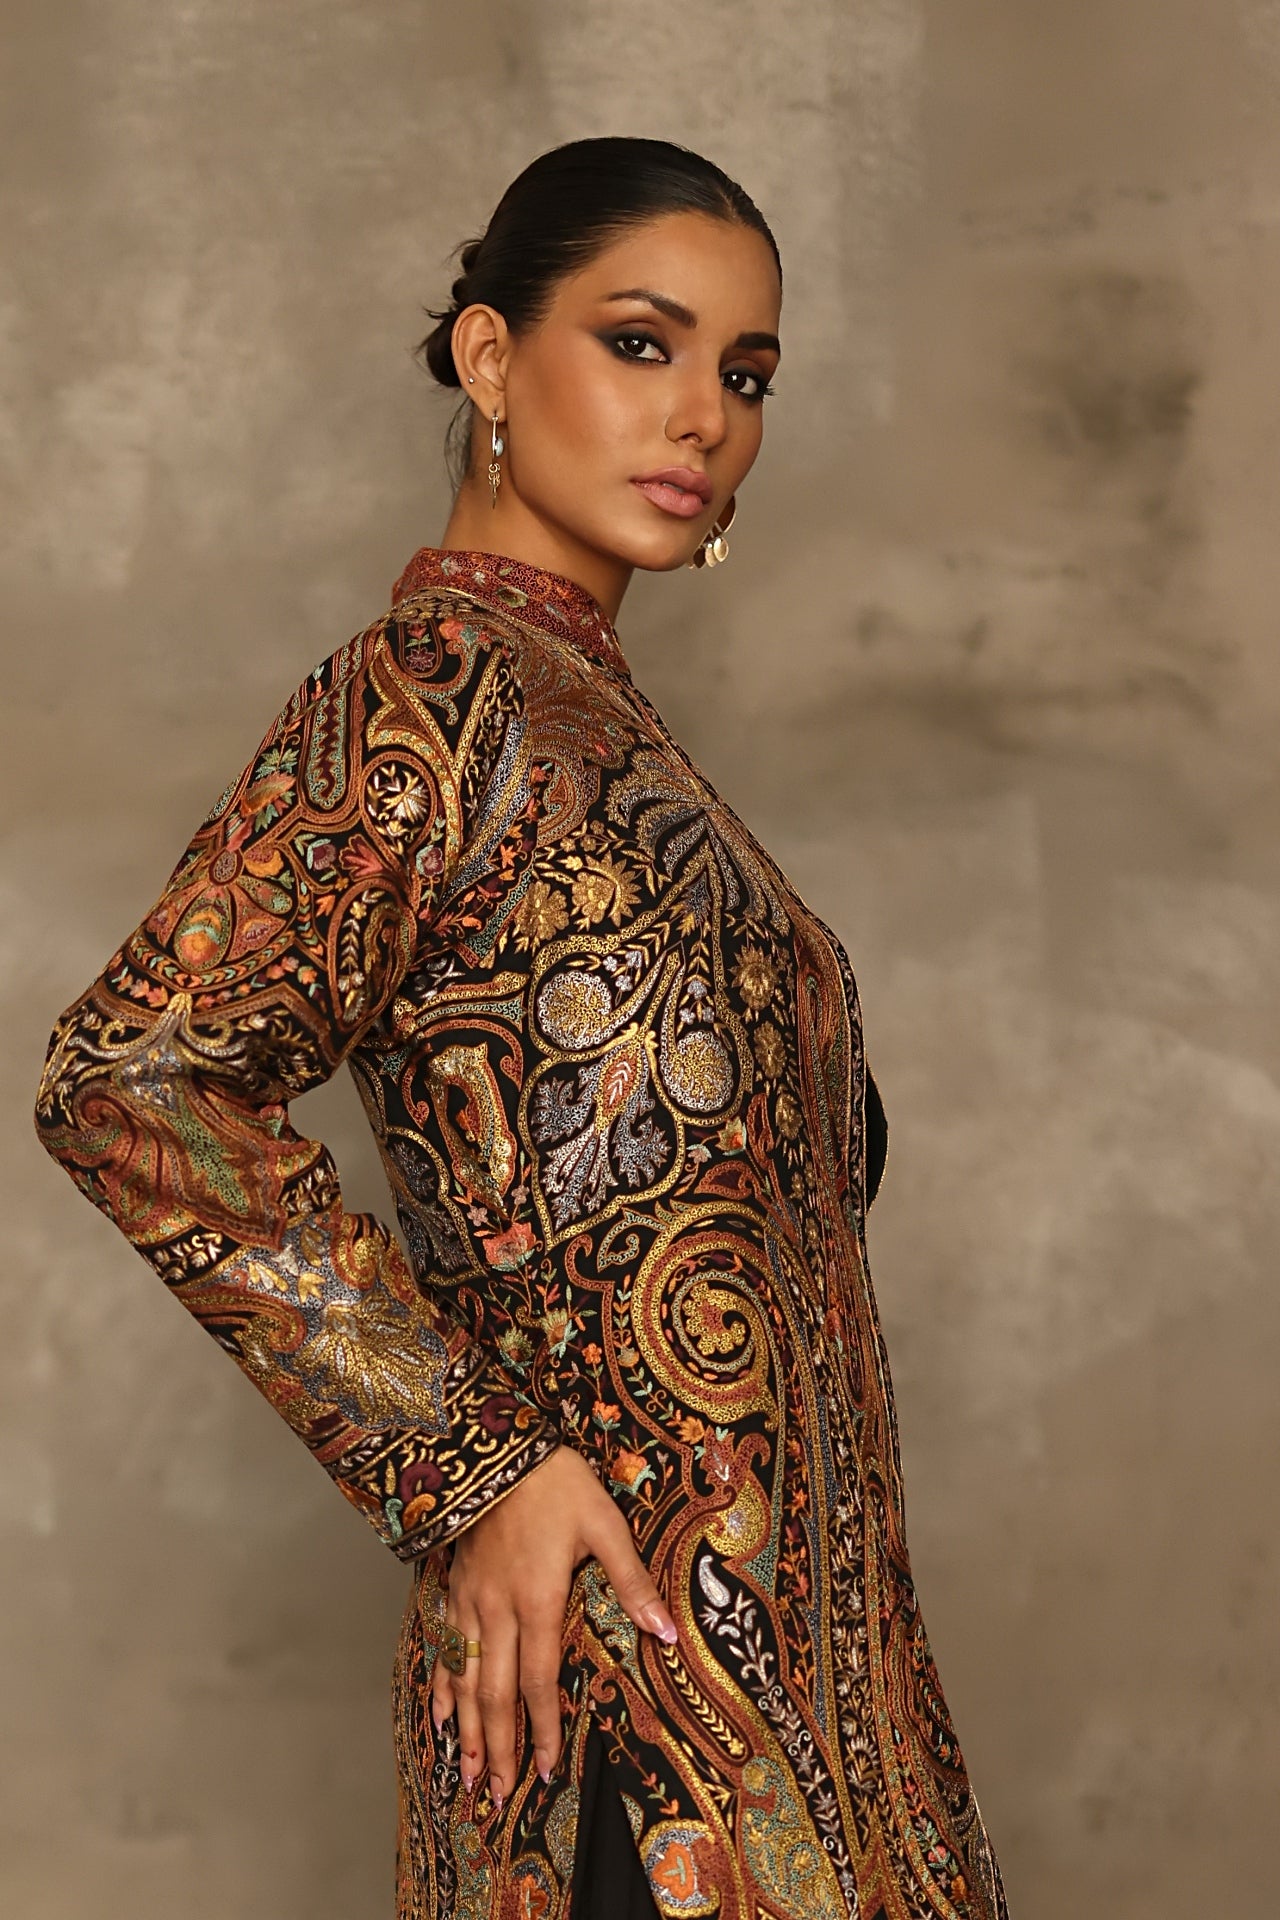 Aafrinish By Niazi Rabita Ali Rizwan Ul Haq Black Pita Tilla jacket adorned with intricate Kashida embroidery in hues of dull gold and silver zari Pakistan Fashion